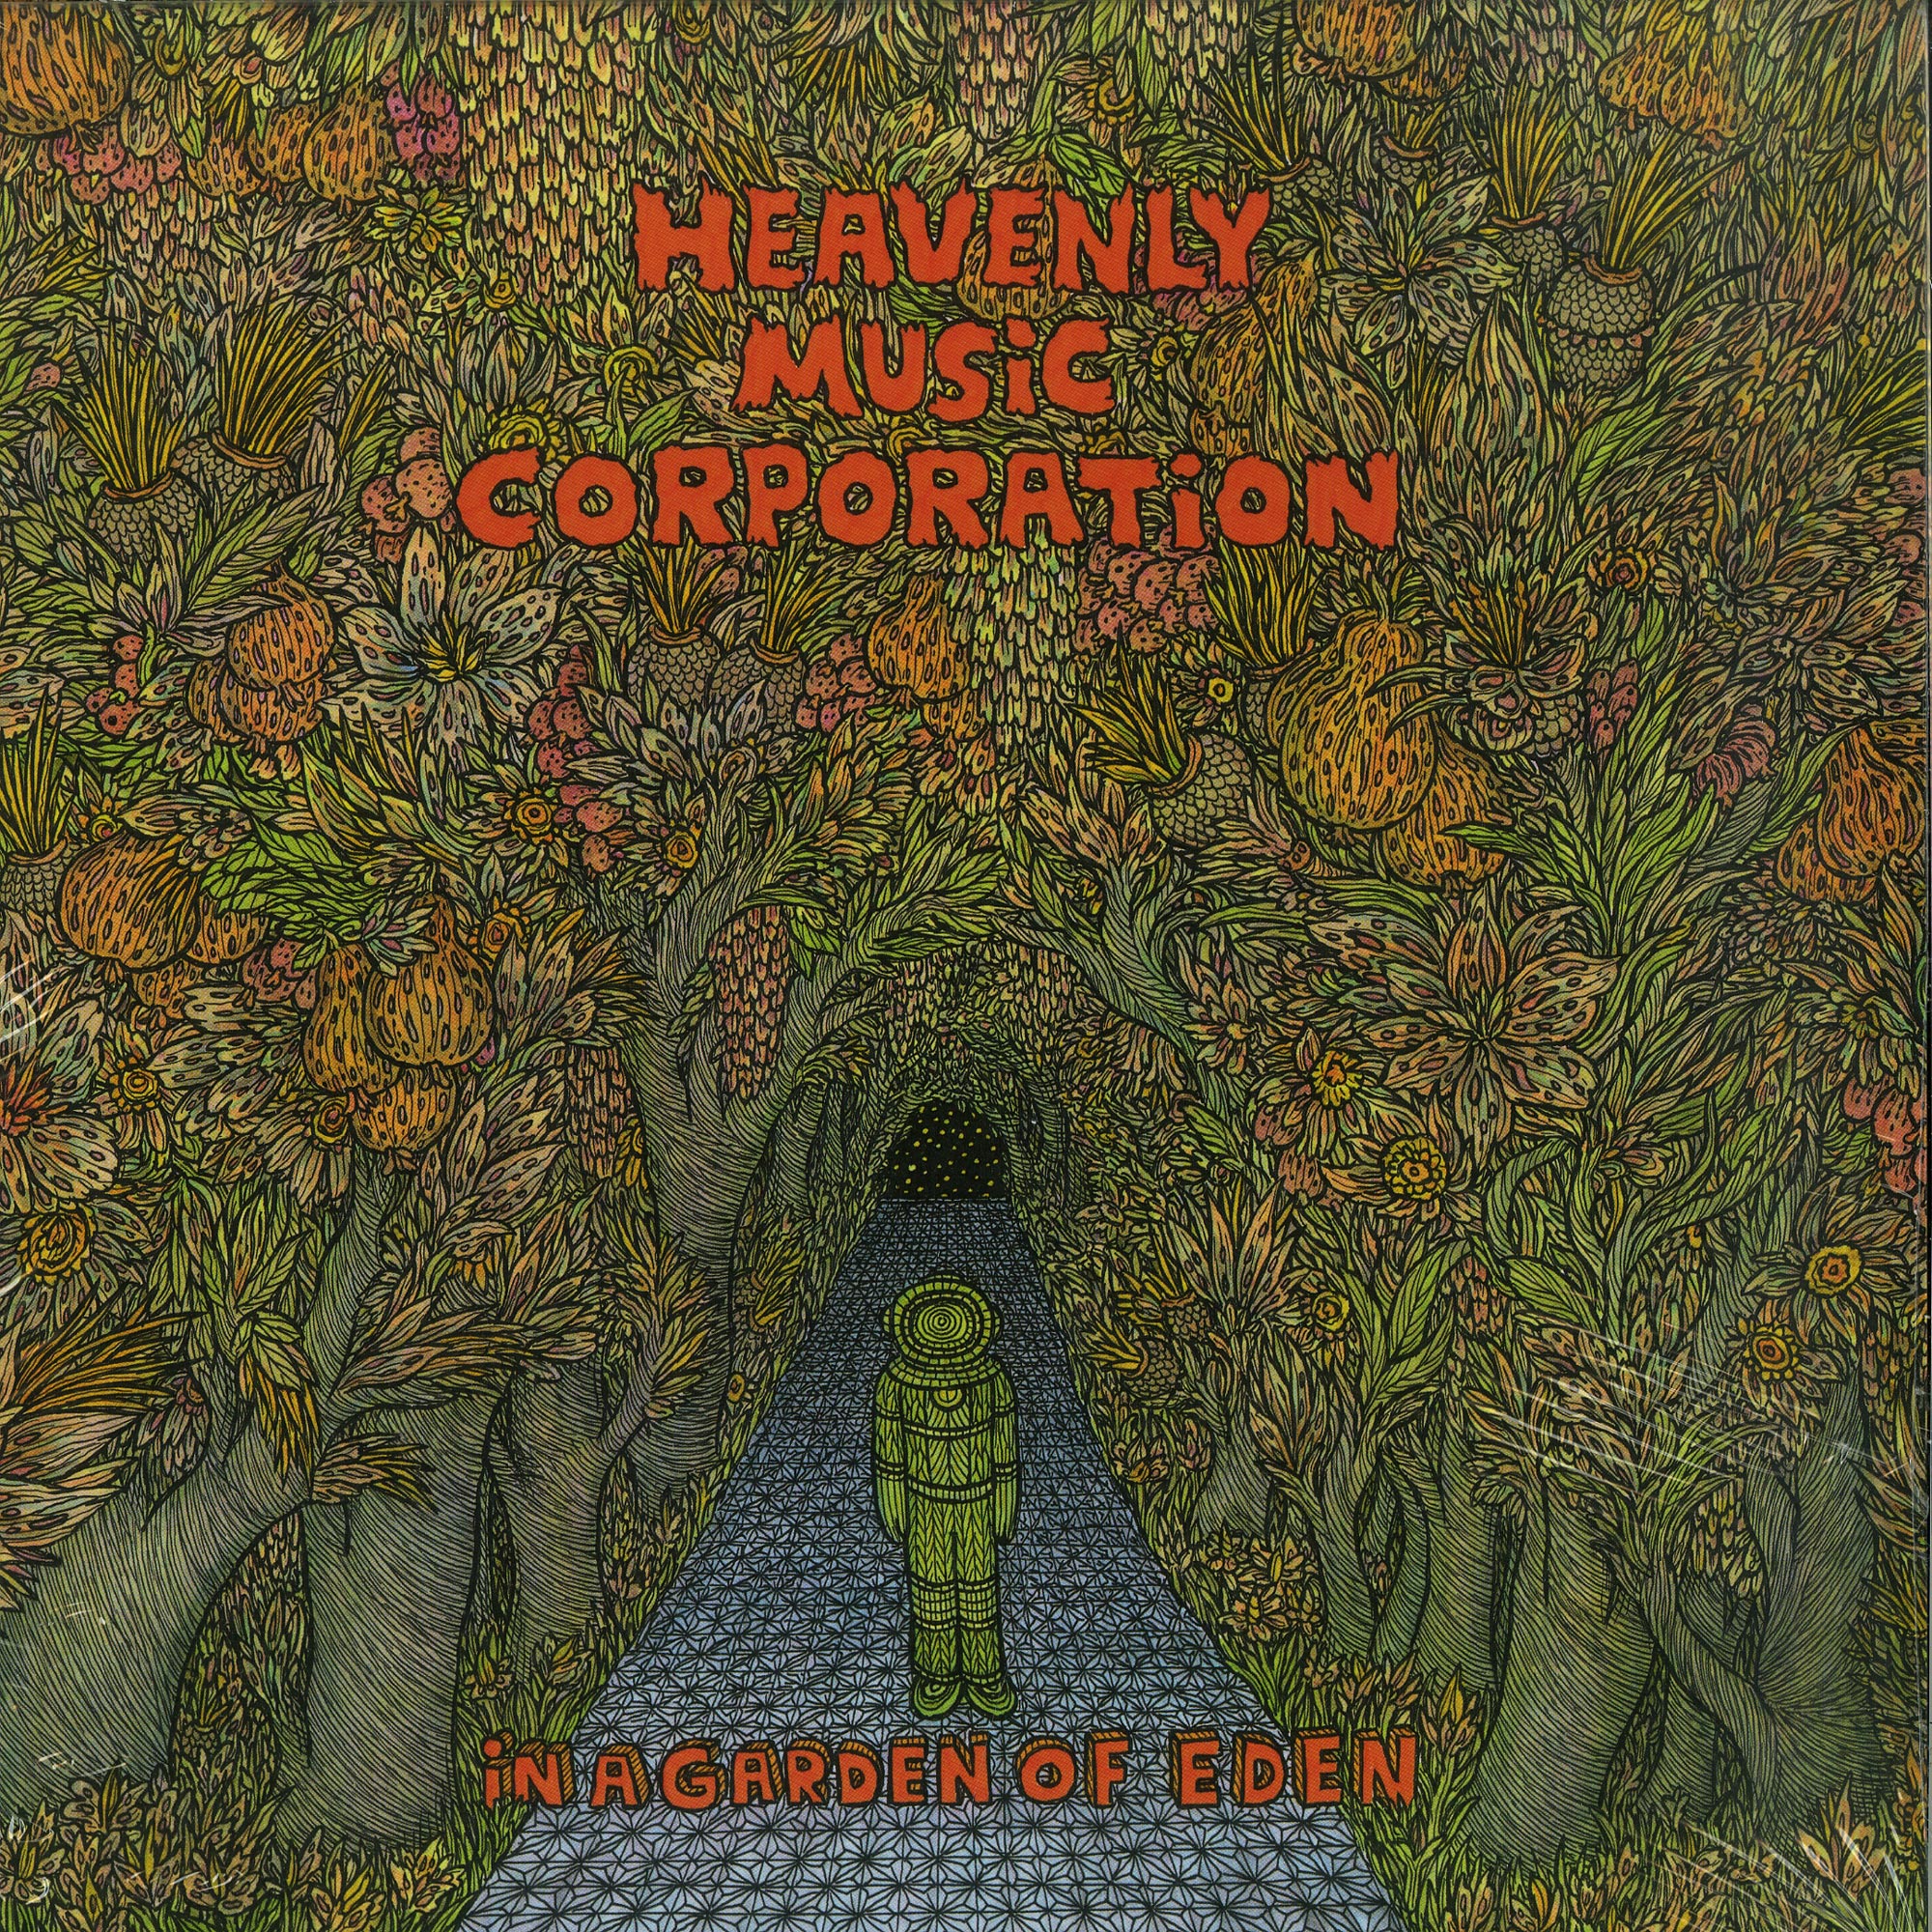 Heavenly Music Corporation In A Garden Of Eden